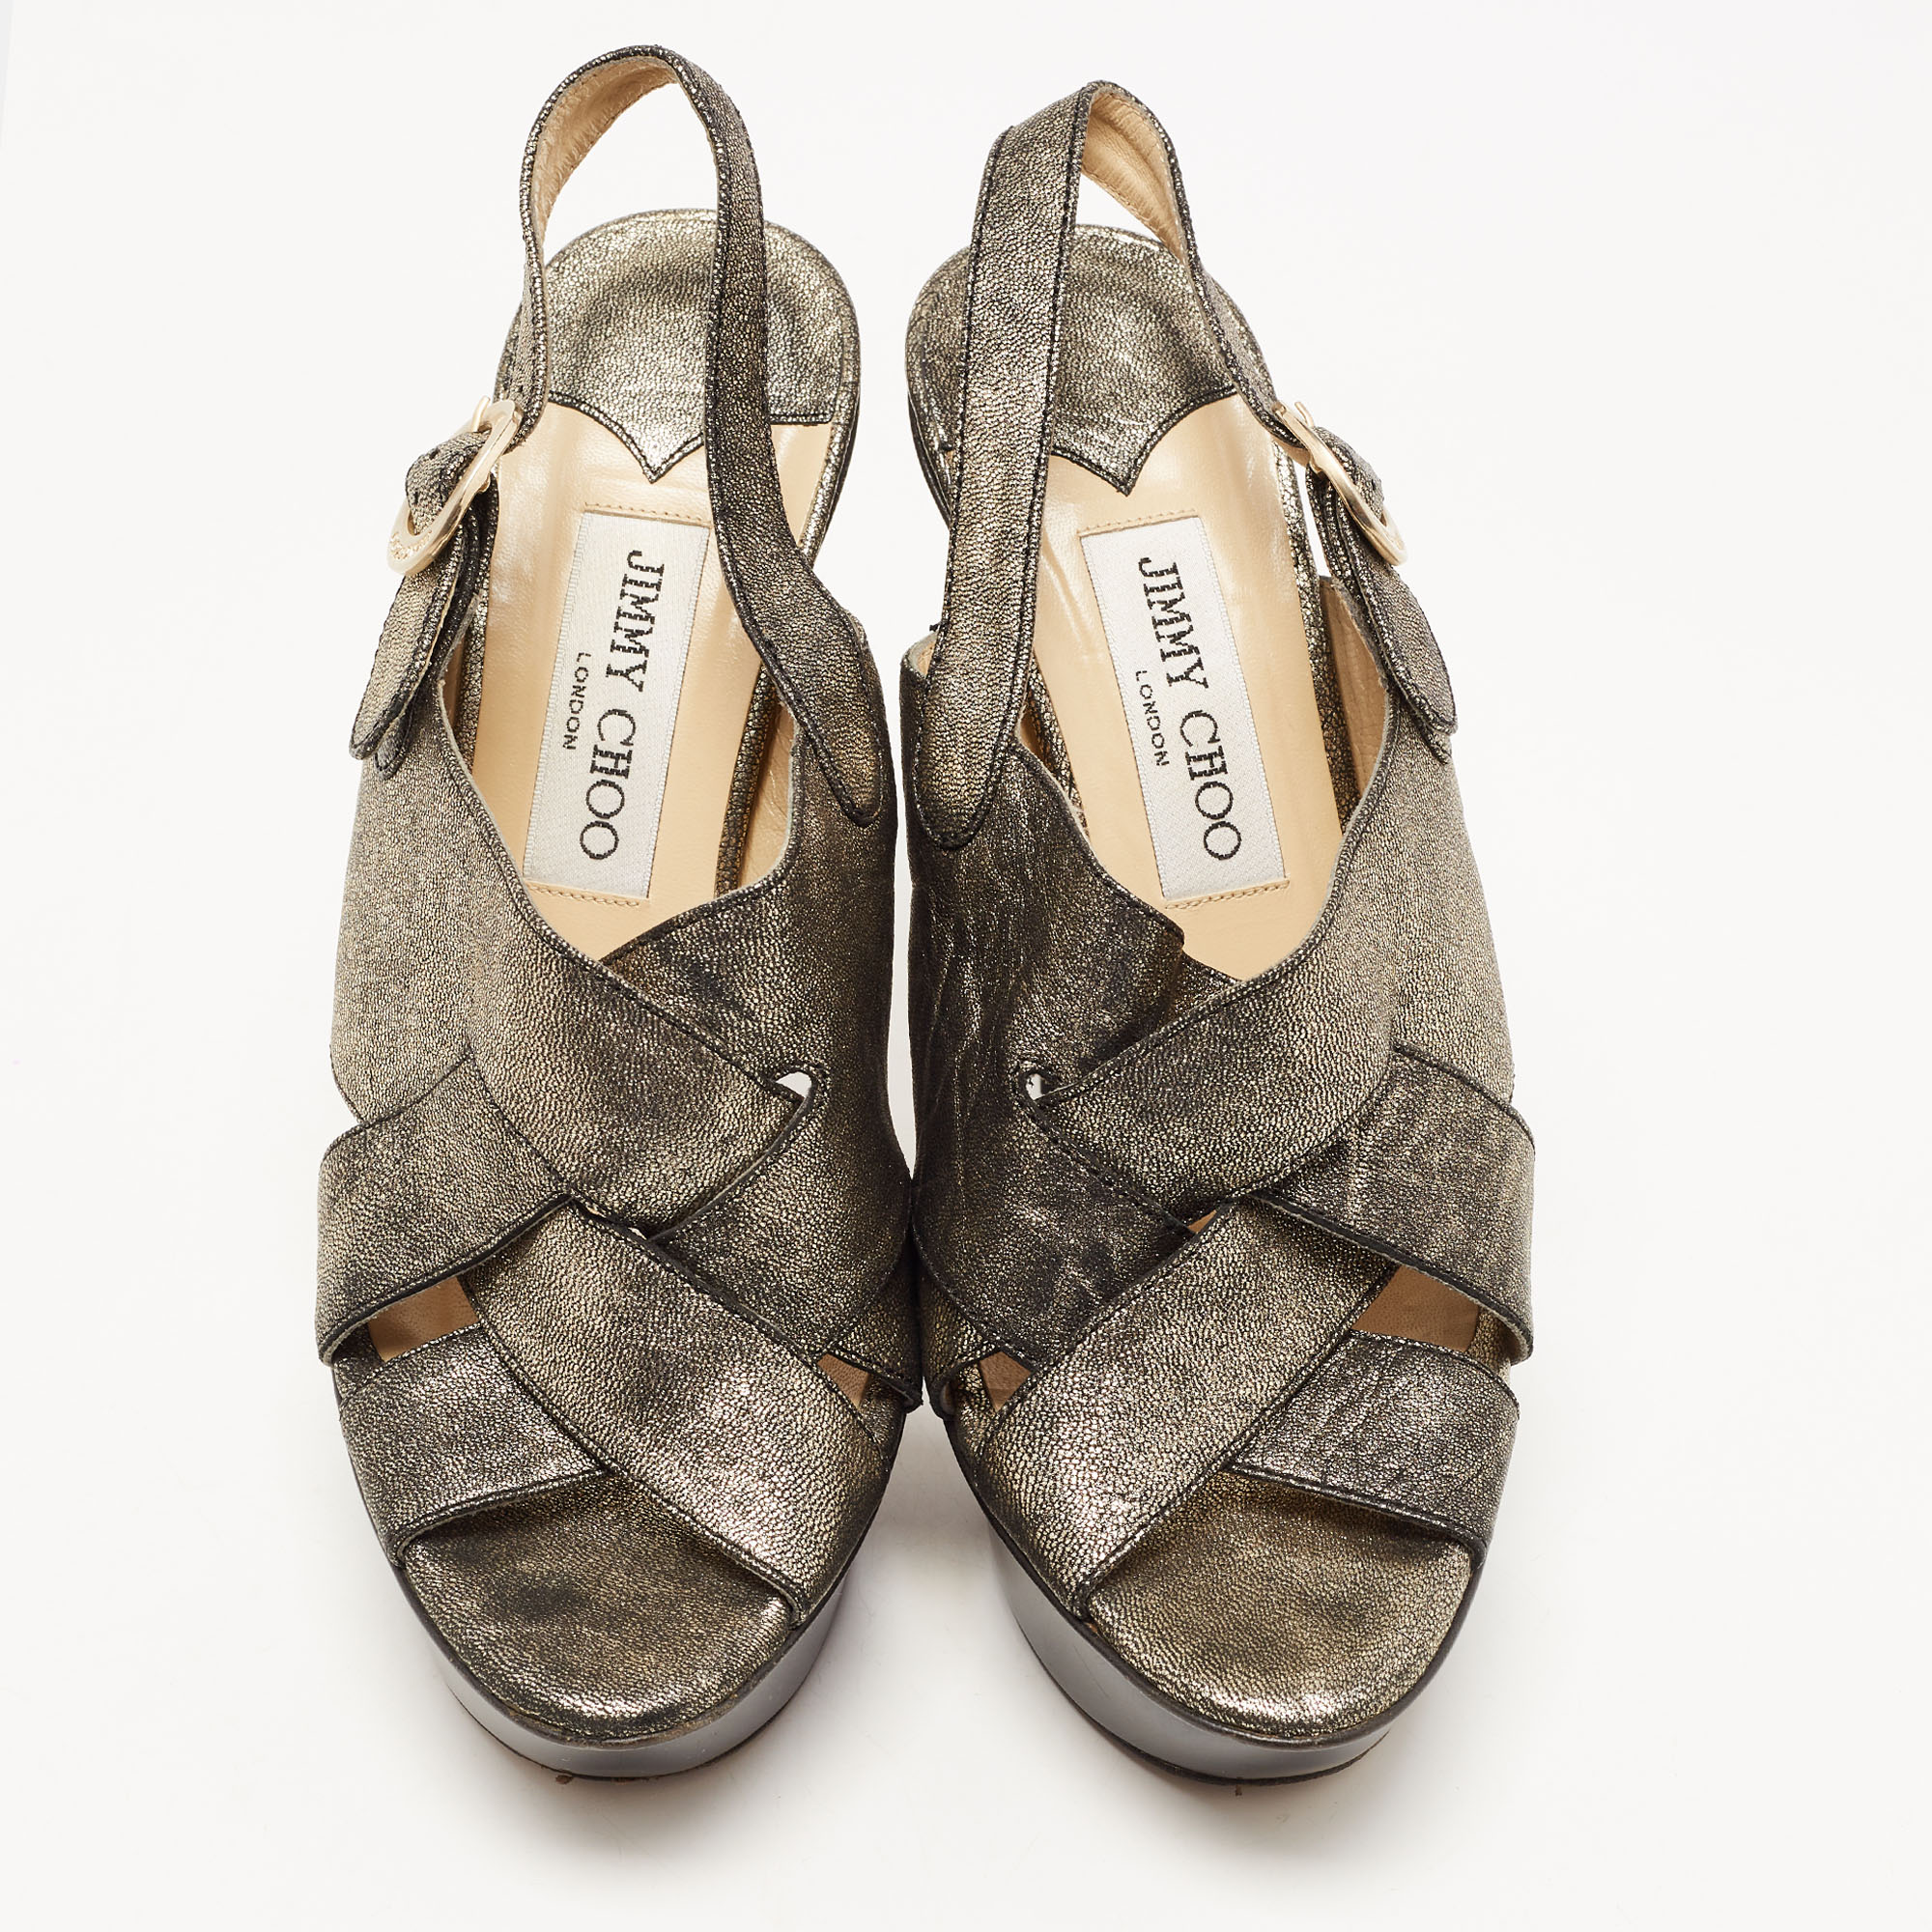 Jimmy Choo Metallic Leather Platform Slingback Sandals Size 37.5